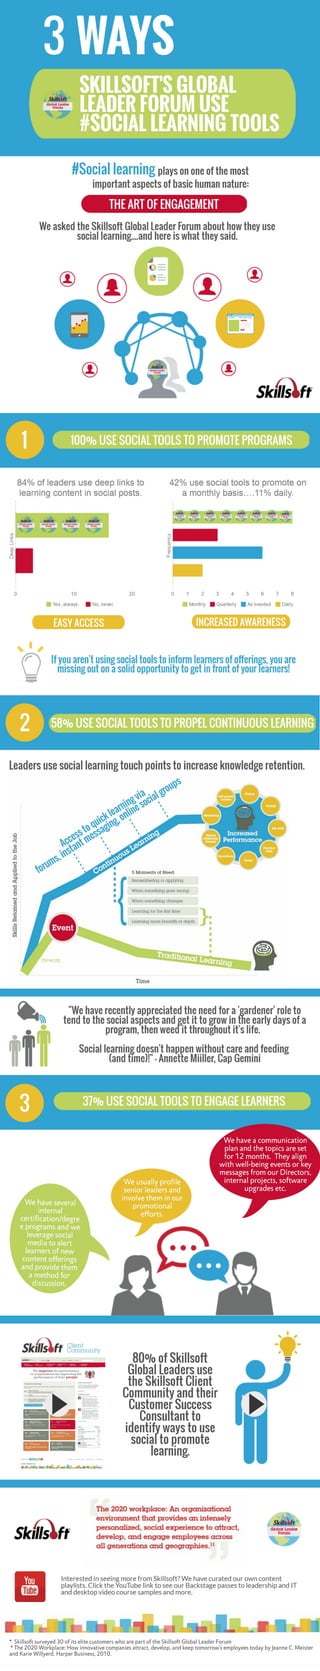 3 Ways the Skillsoft Global Leader Forum Employs Social Learning